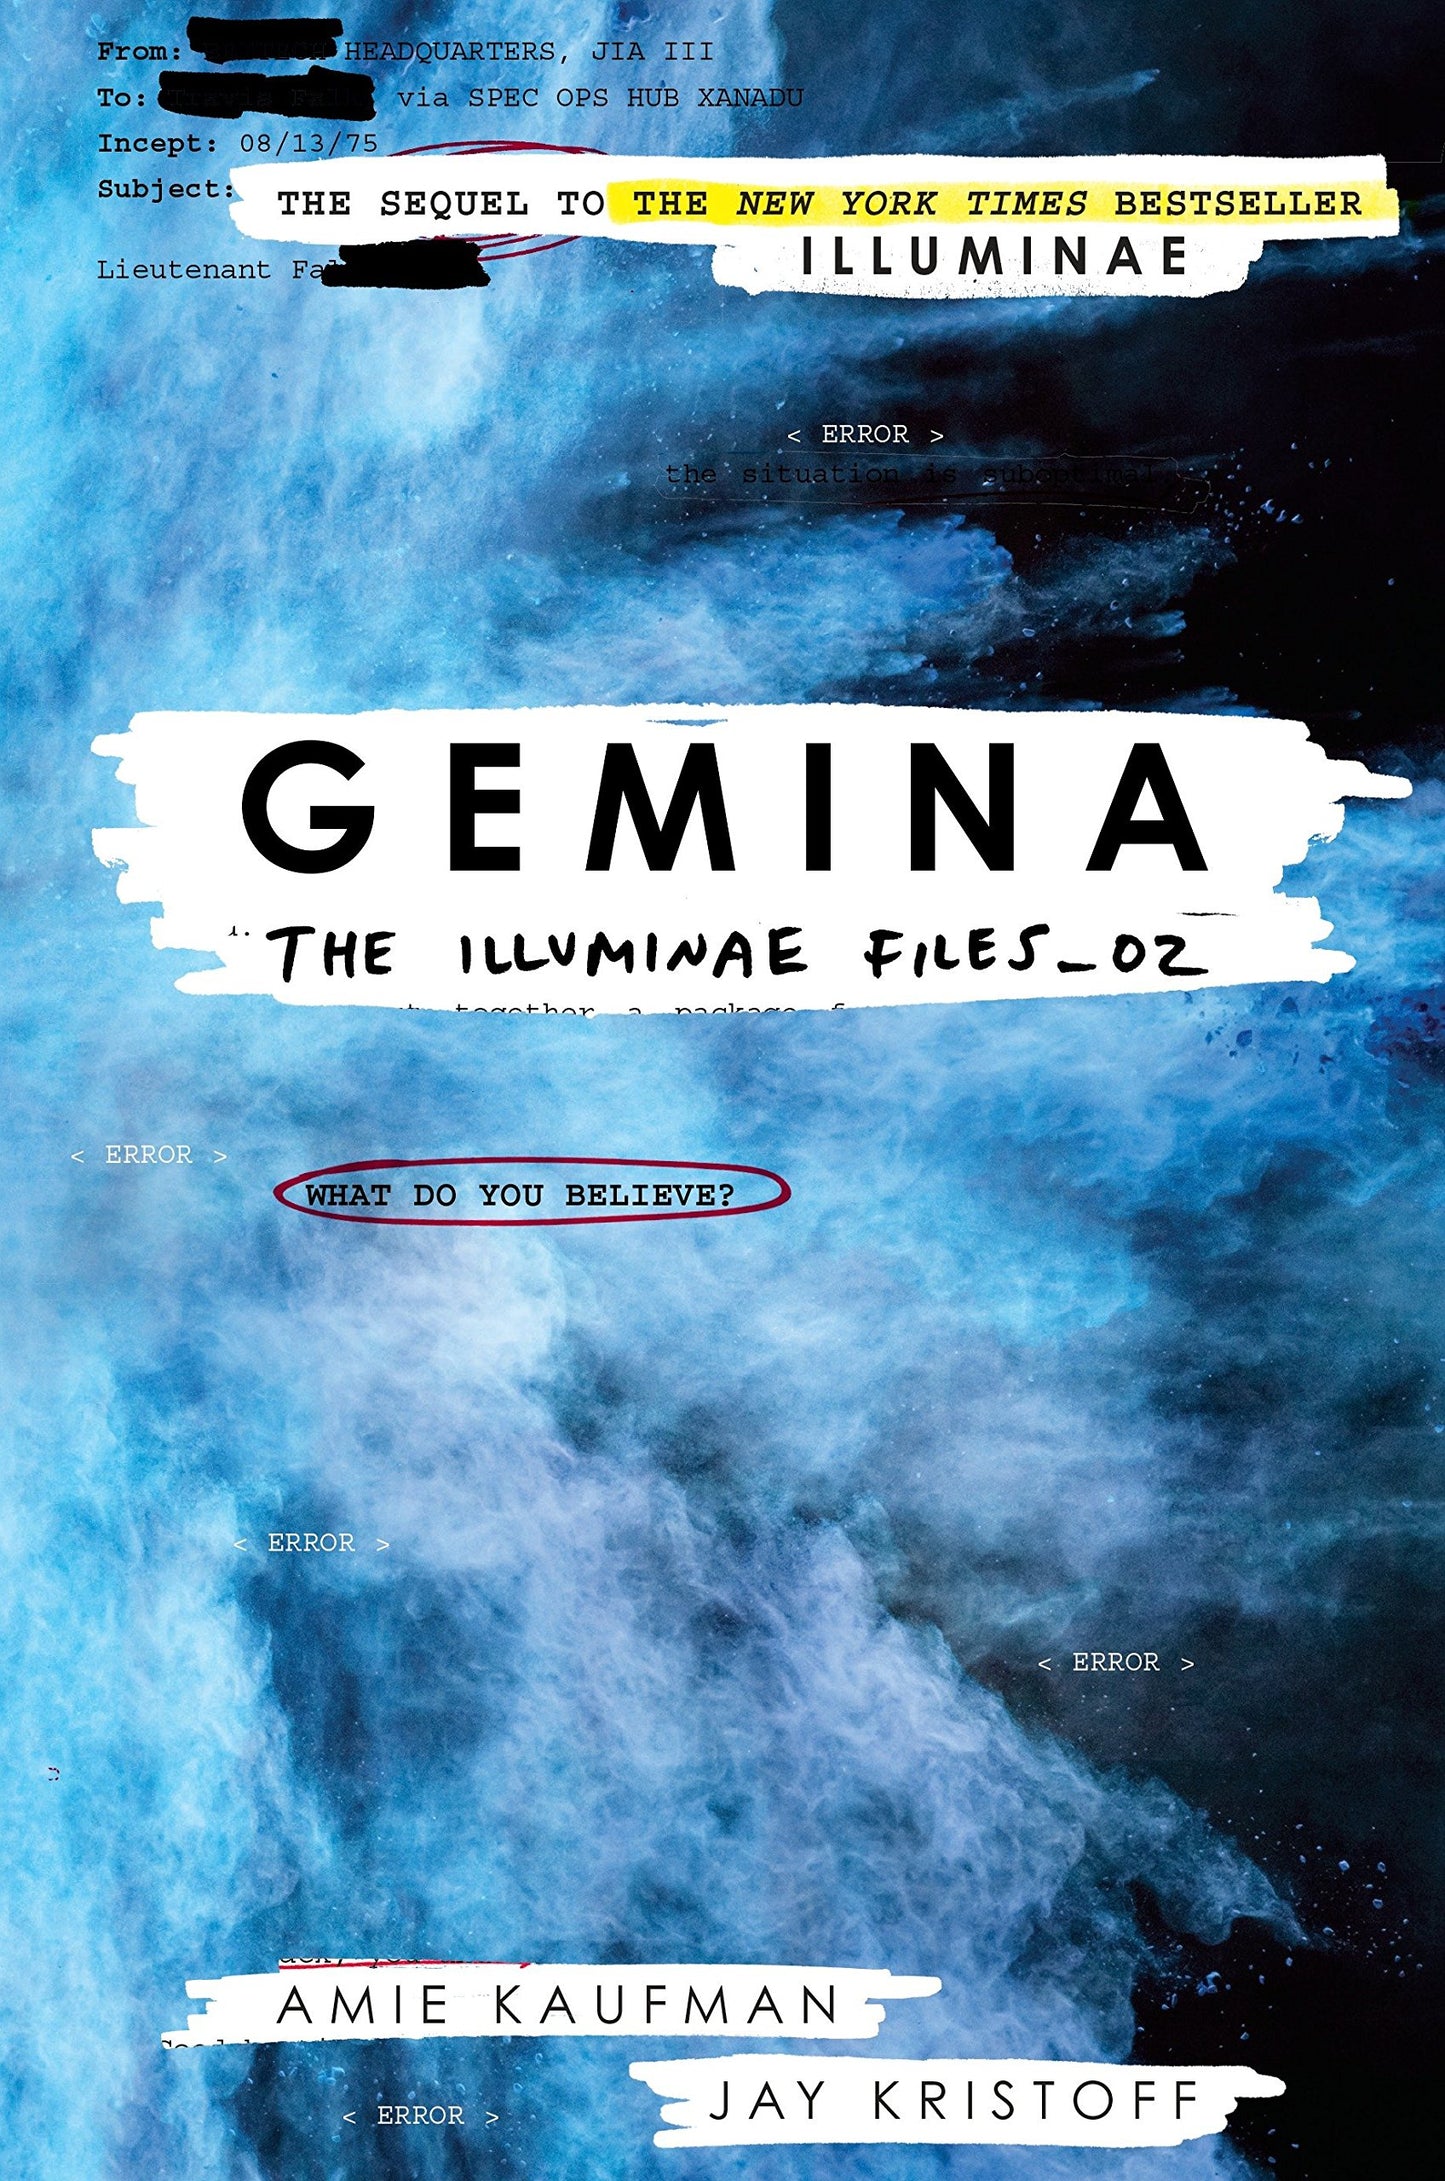 Gemina: The Illuminae Files Book 2